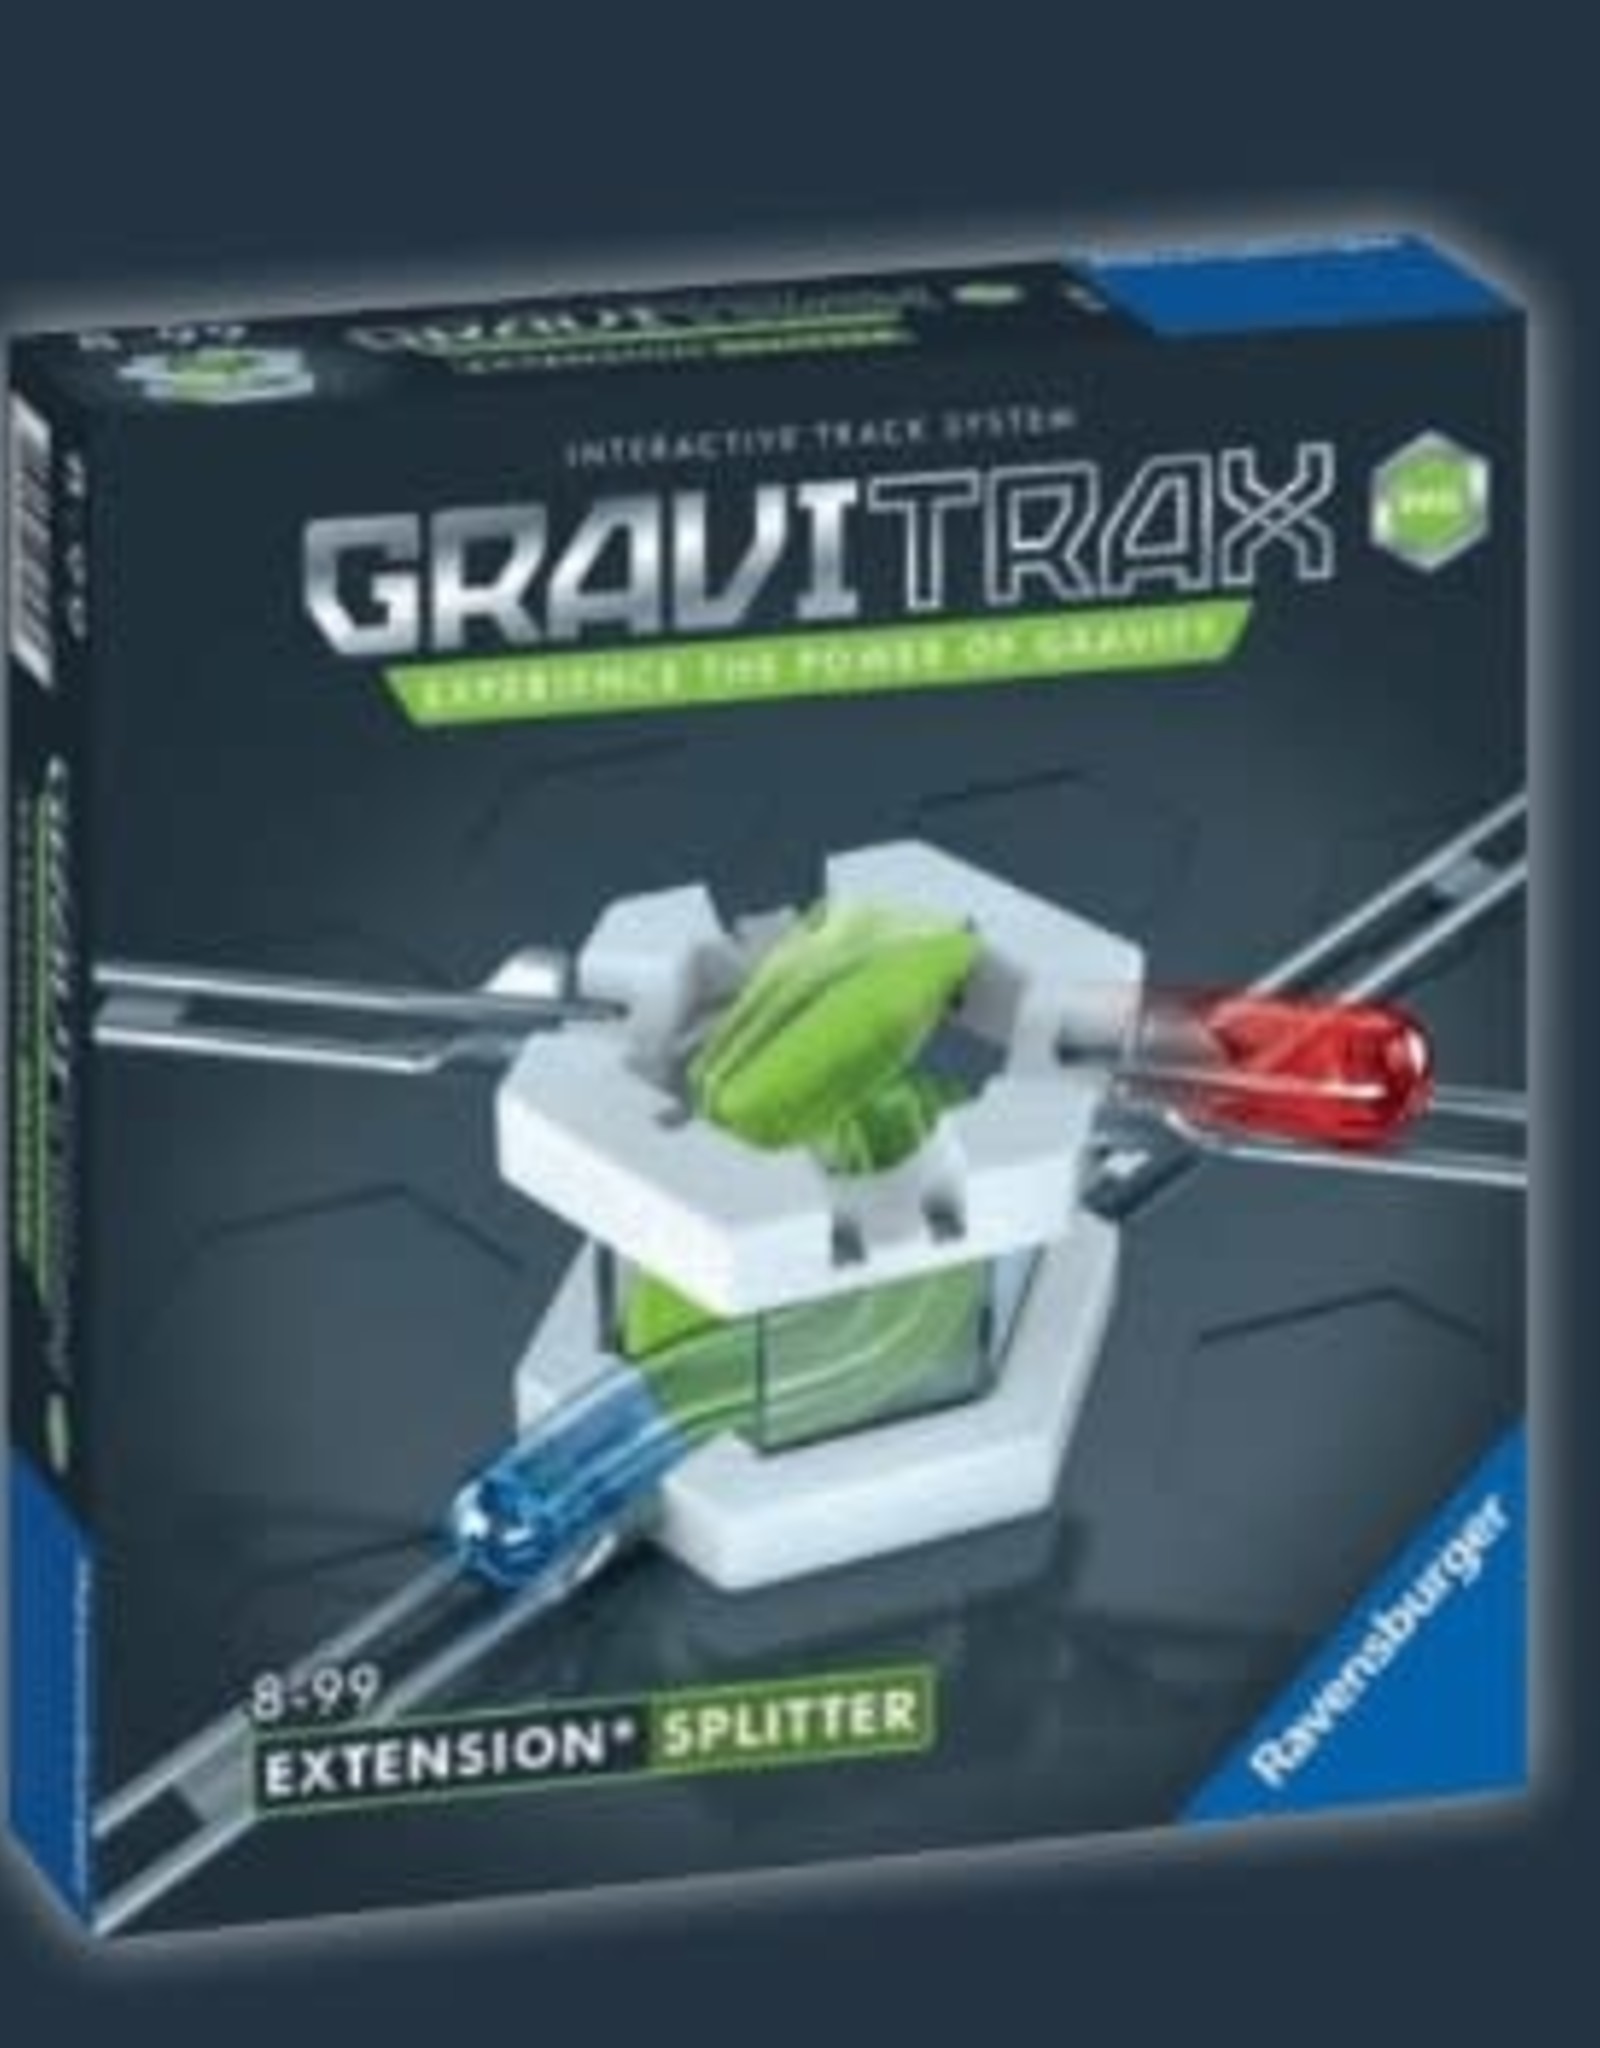 Gravitrax PRO: Splitter - Lets Play: Games & Toys